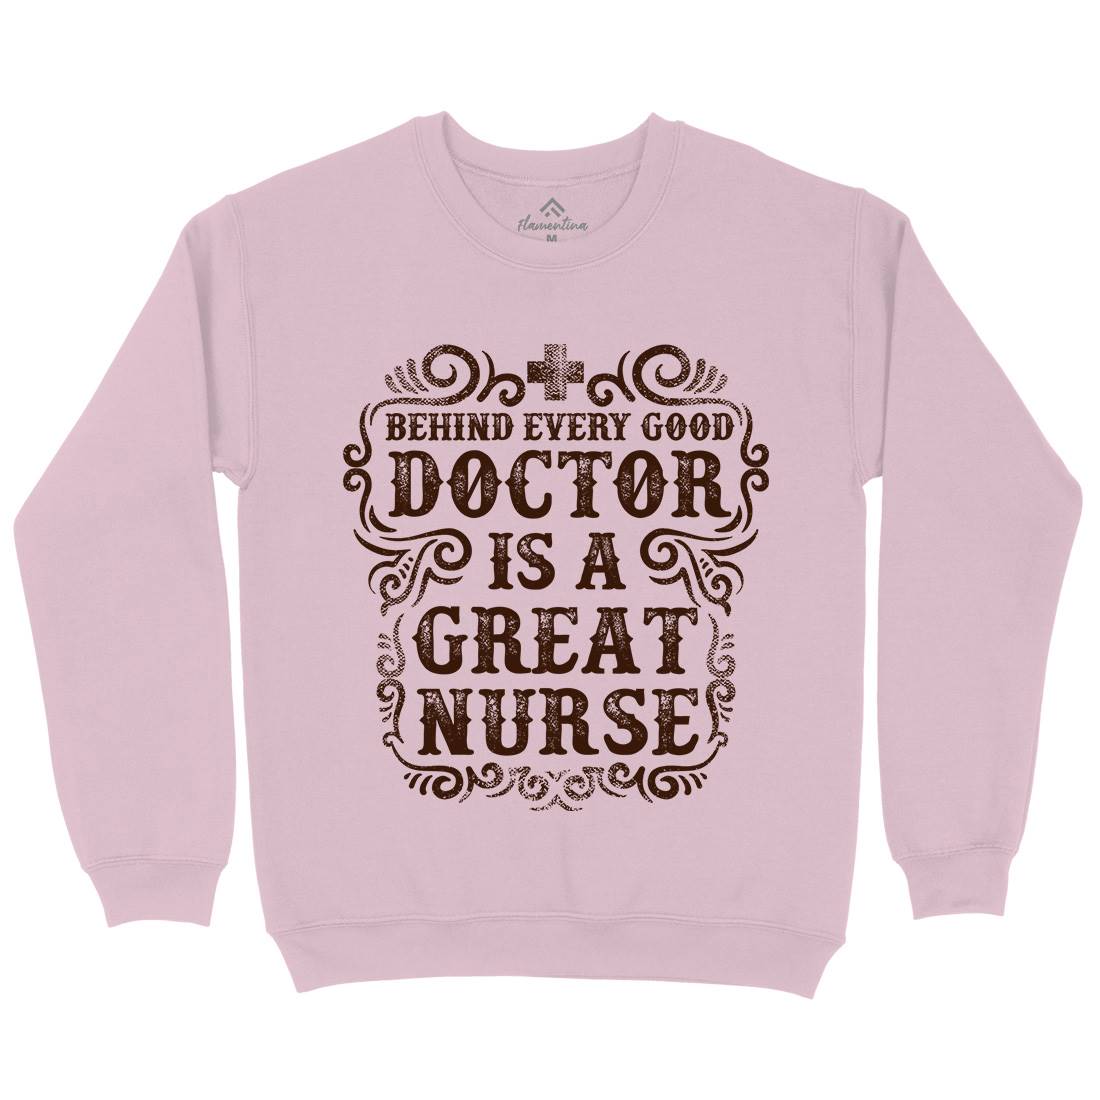 Behind Every Good Doctor Is A Great Nurse Kids Crew Neck Sweatshirt Work C910